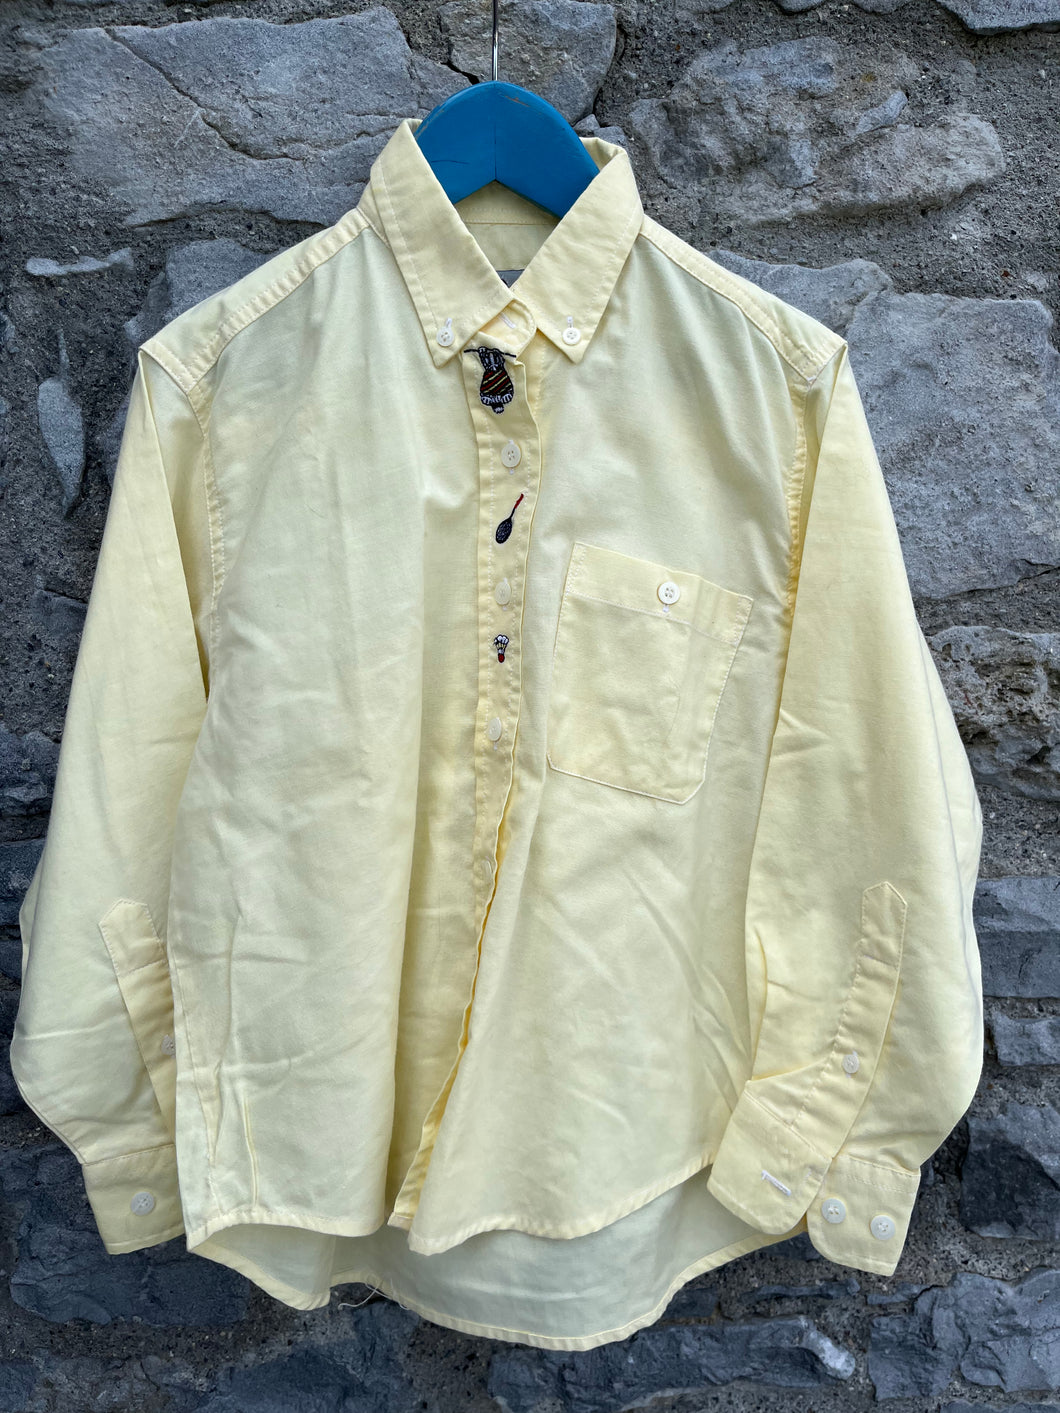 90s yellow badminton shirt  7y (122cm)